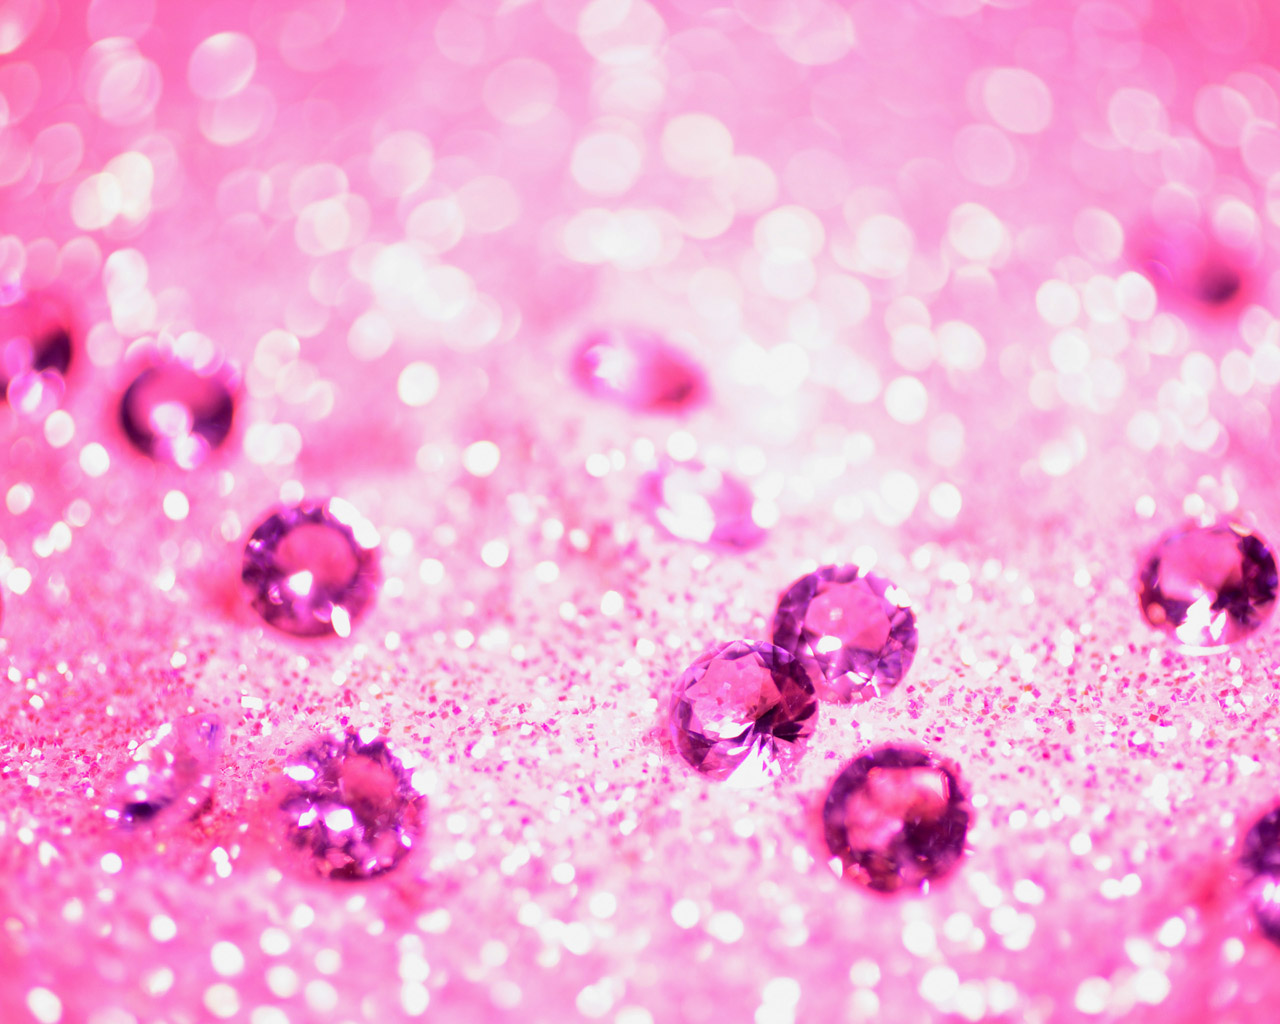  Pink Diamond Desktop Wallpaper on this Pink Wallpaper Backgrounds 1280x1024